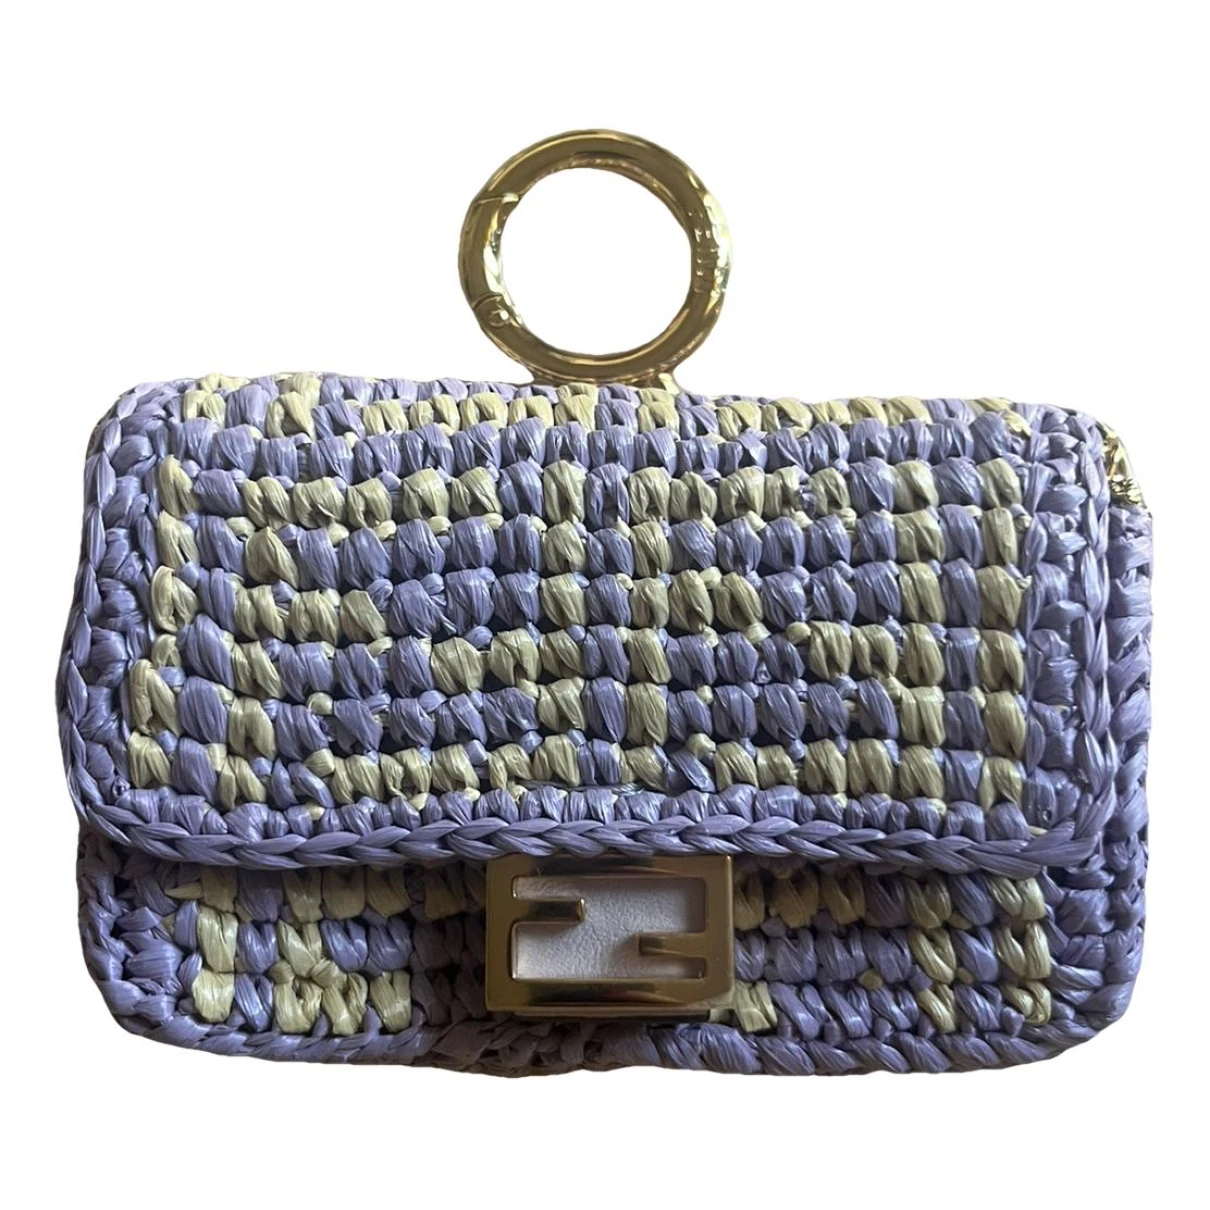 Pre-owned Fendi Baguette Handbag In Purple